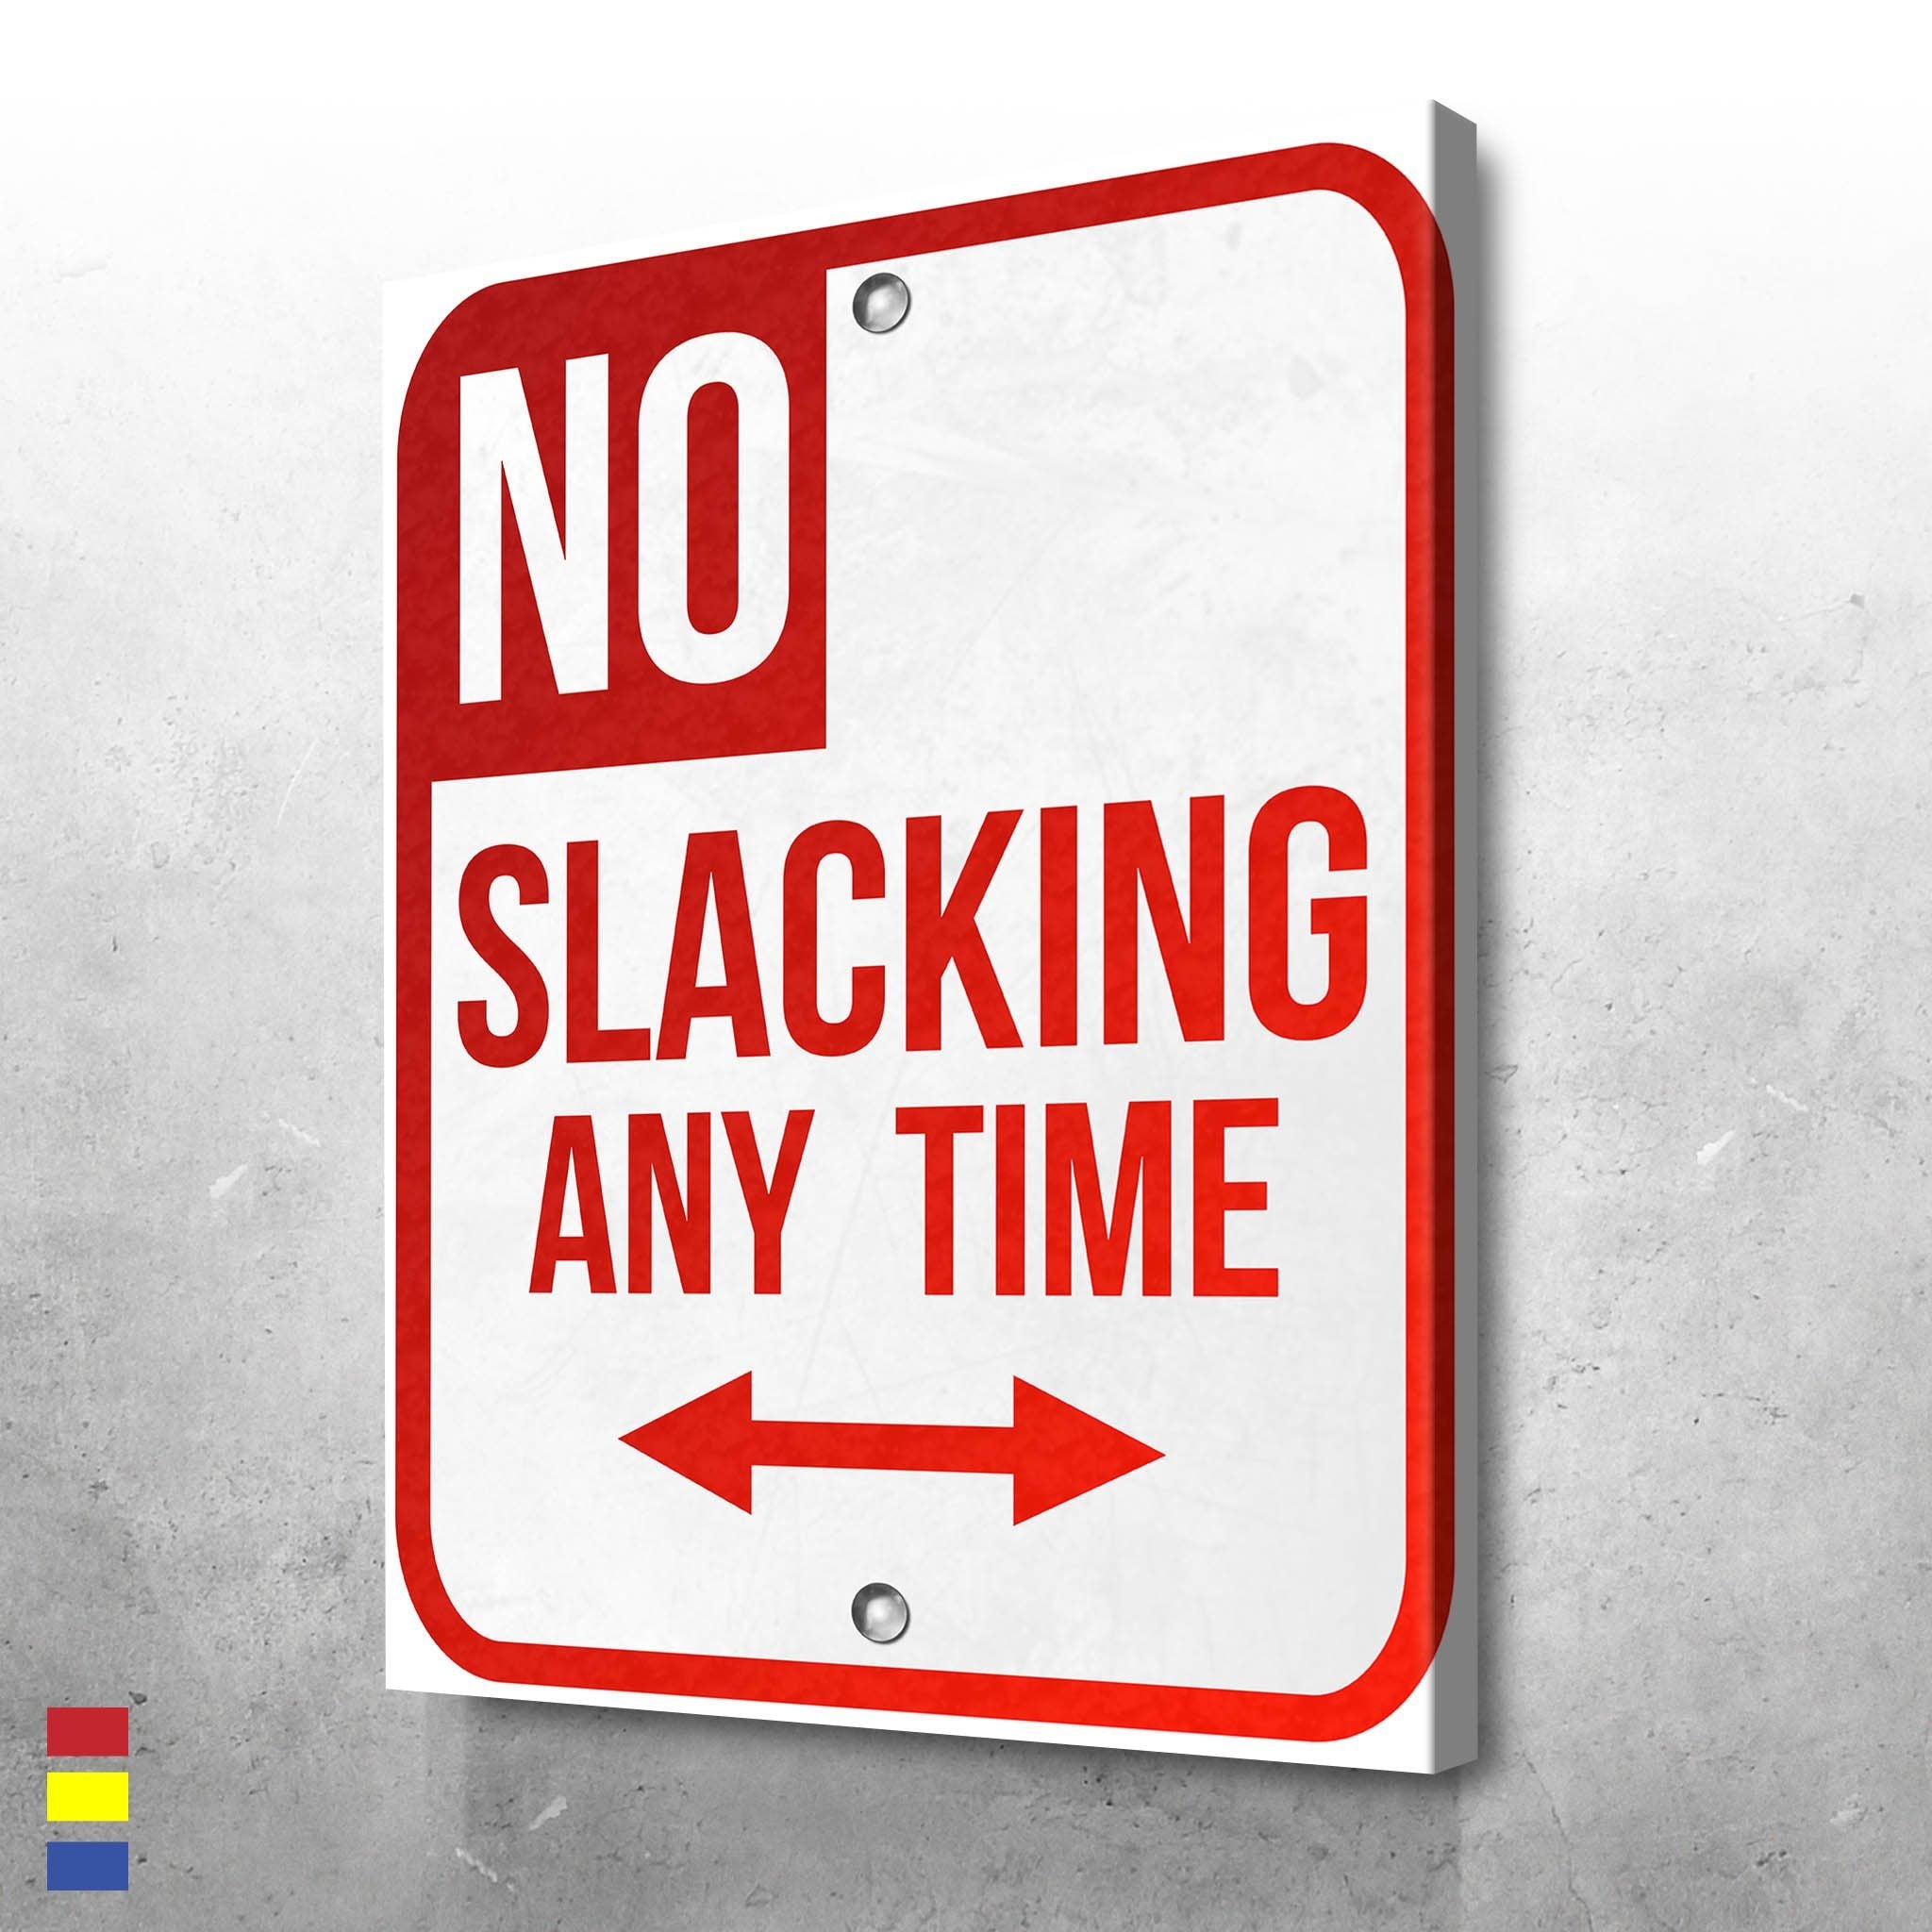 NO SLACKING